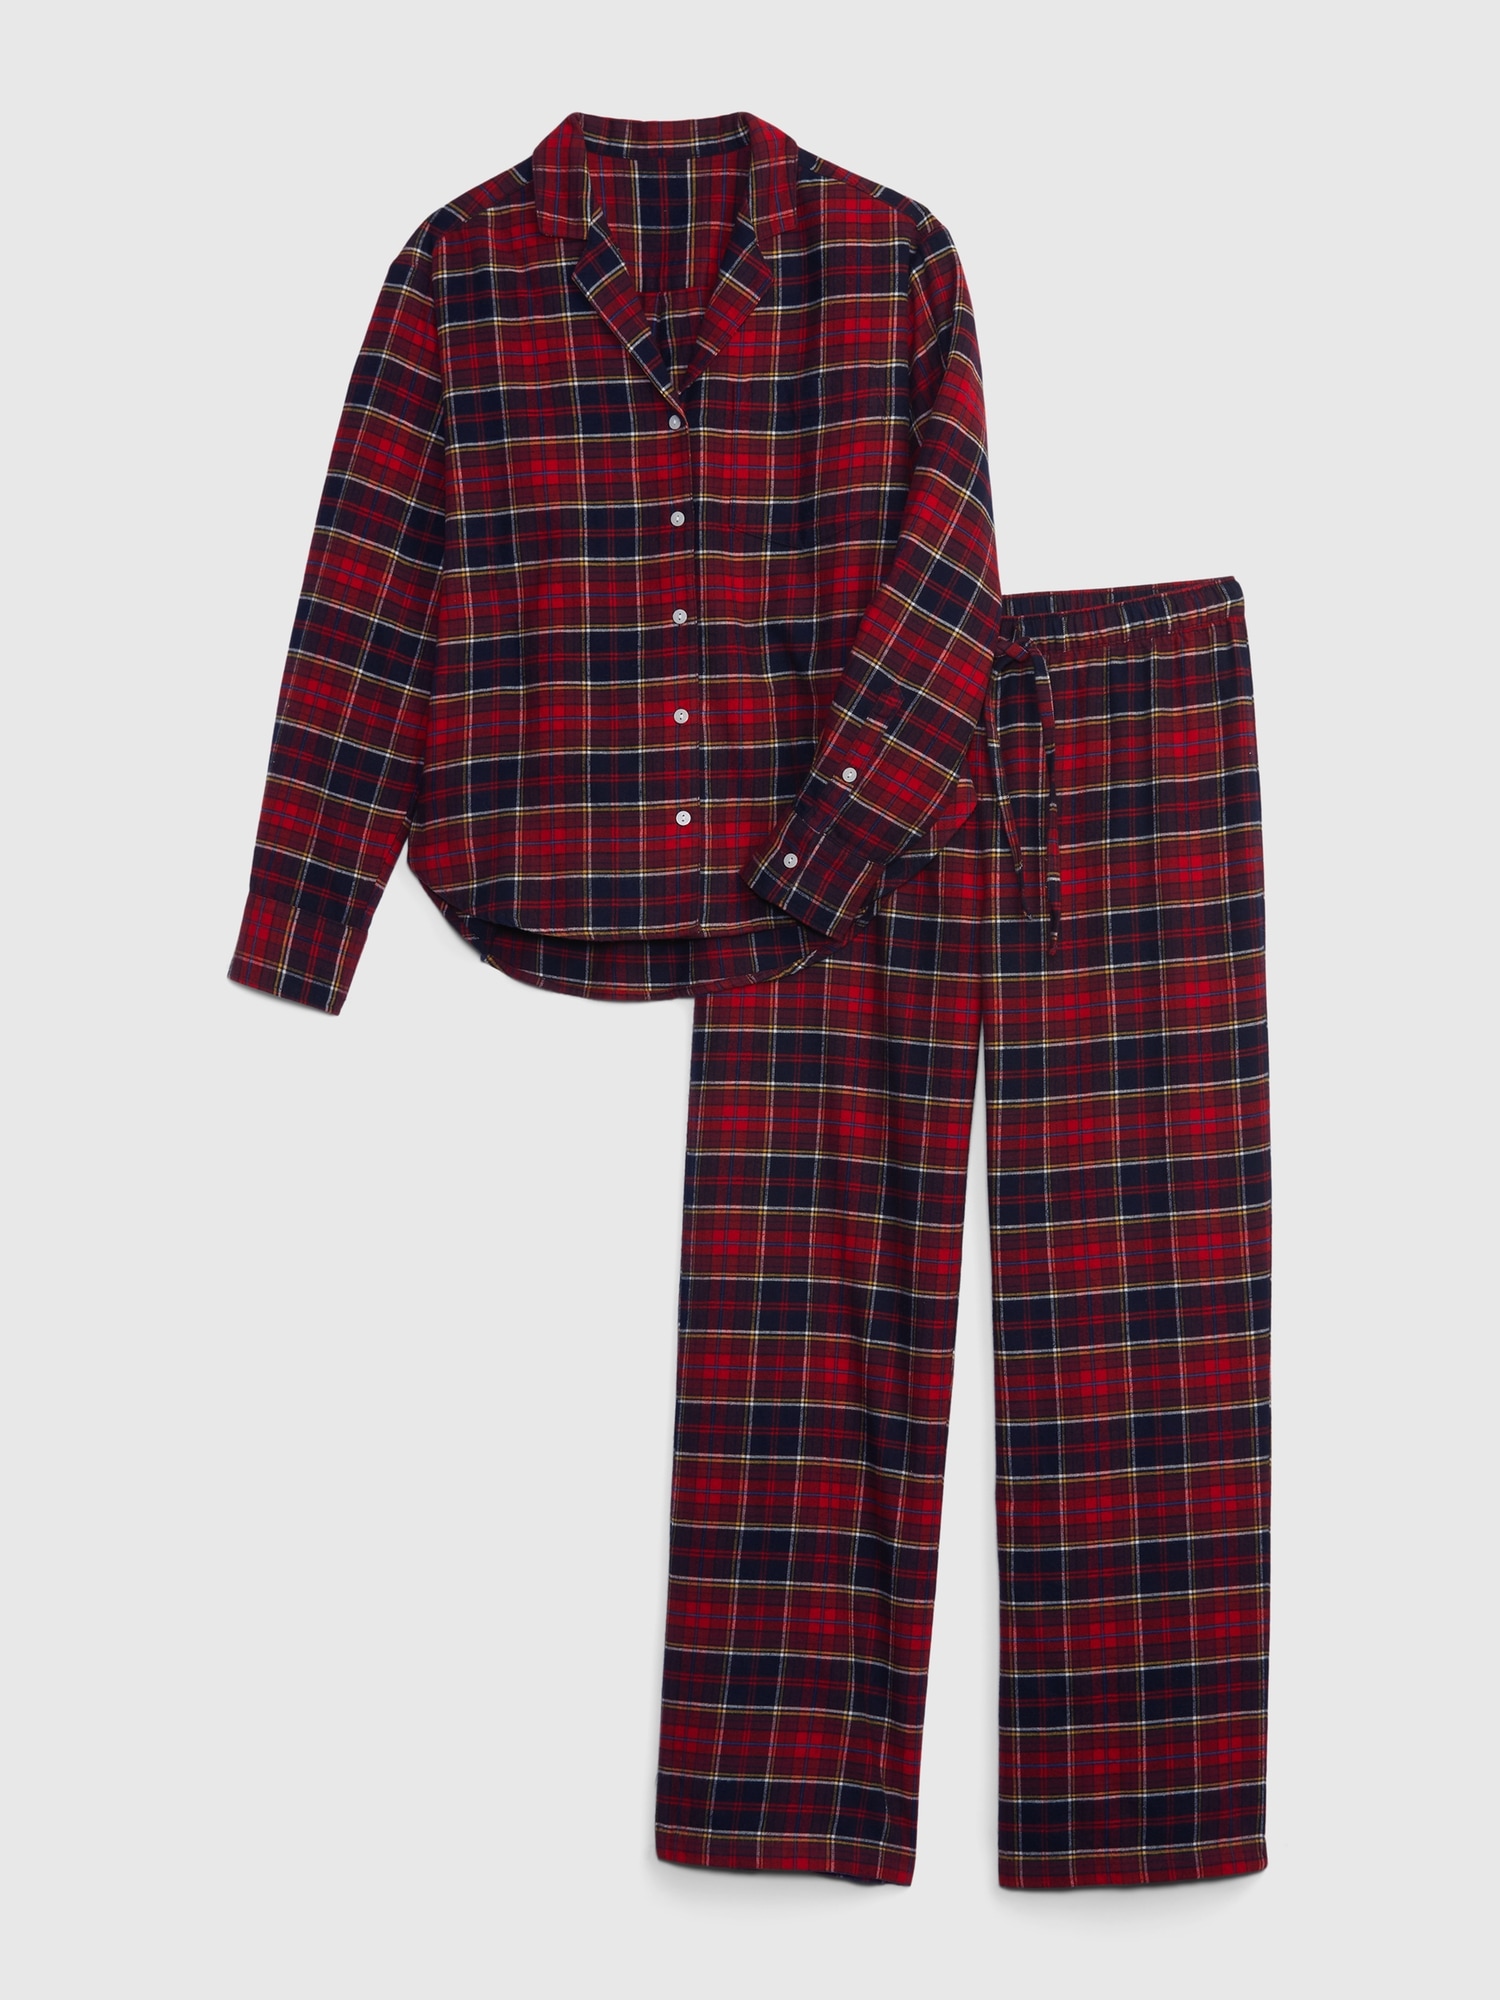 Flannel PJ Set | Gap